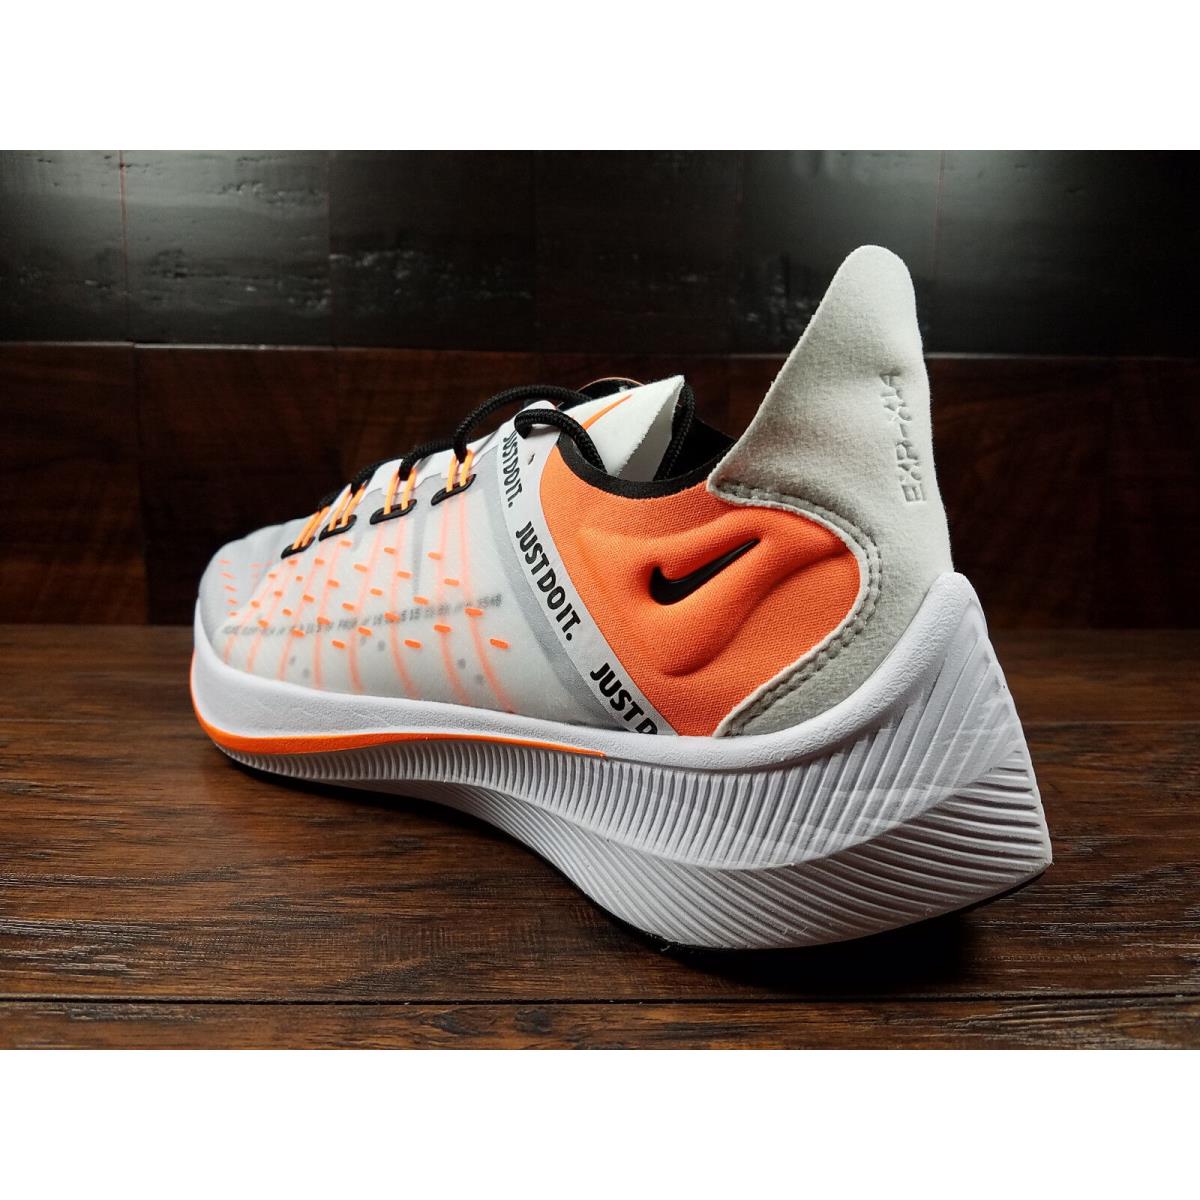 Nike EXP-X14 SE White/total Orange/black Running Jdi AO3095-100 Size 8-13 | - Nike - White / Total Orange / Black | SporTipTop